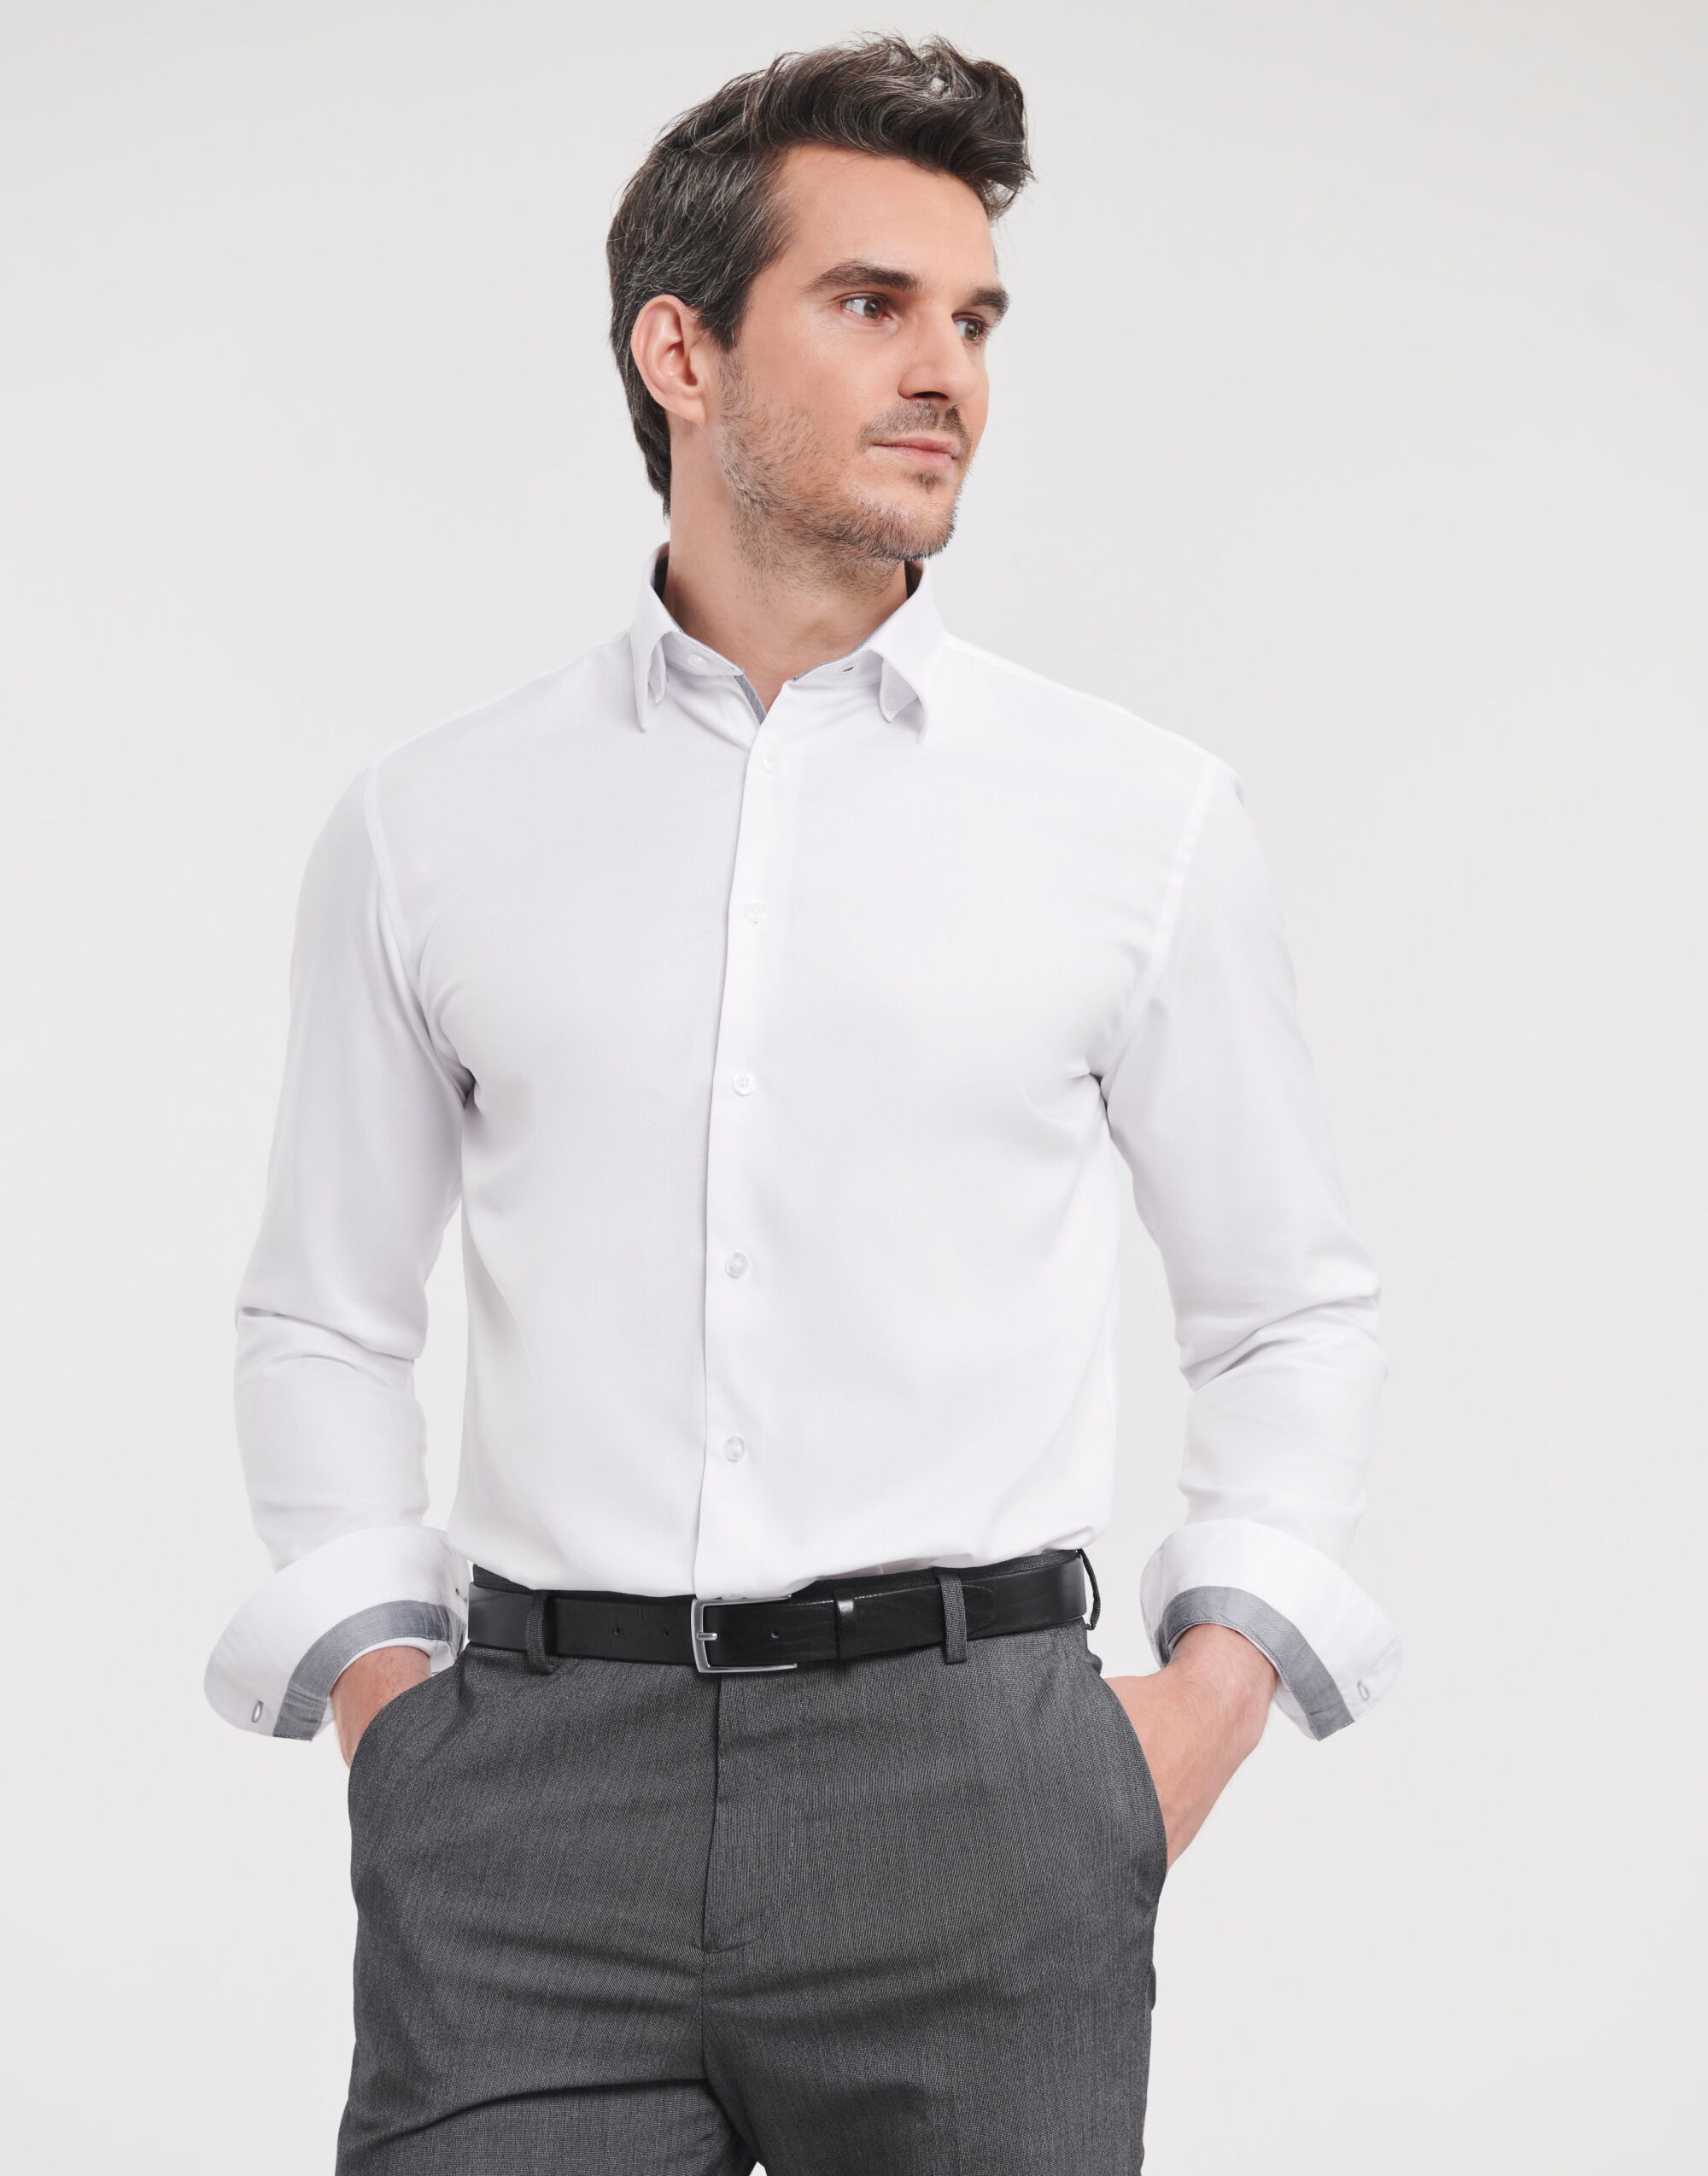 Men's Long Sleeve Tailored Contrast Herringbone Shirt 